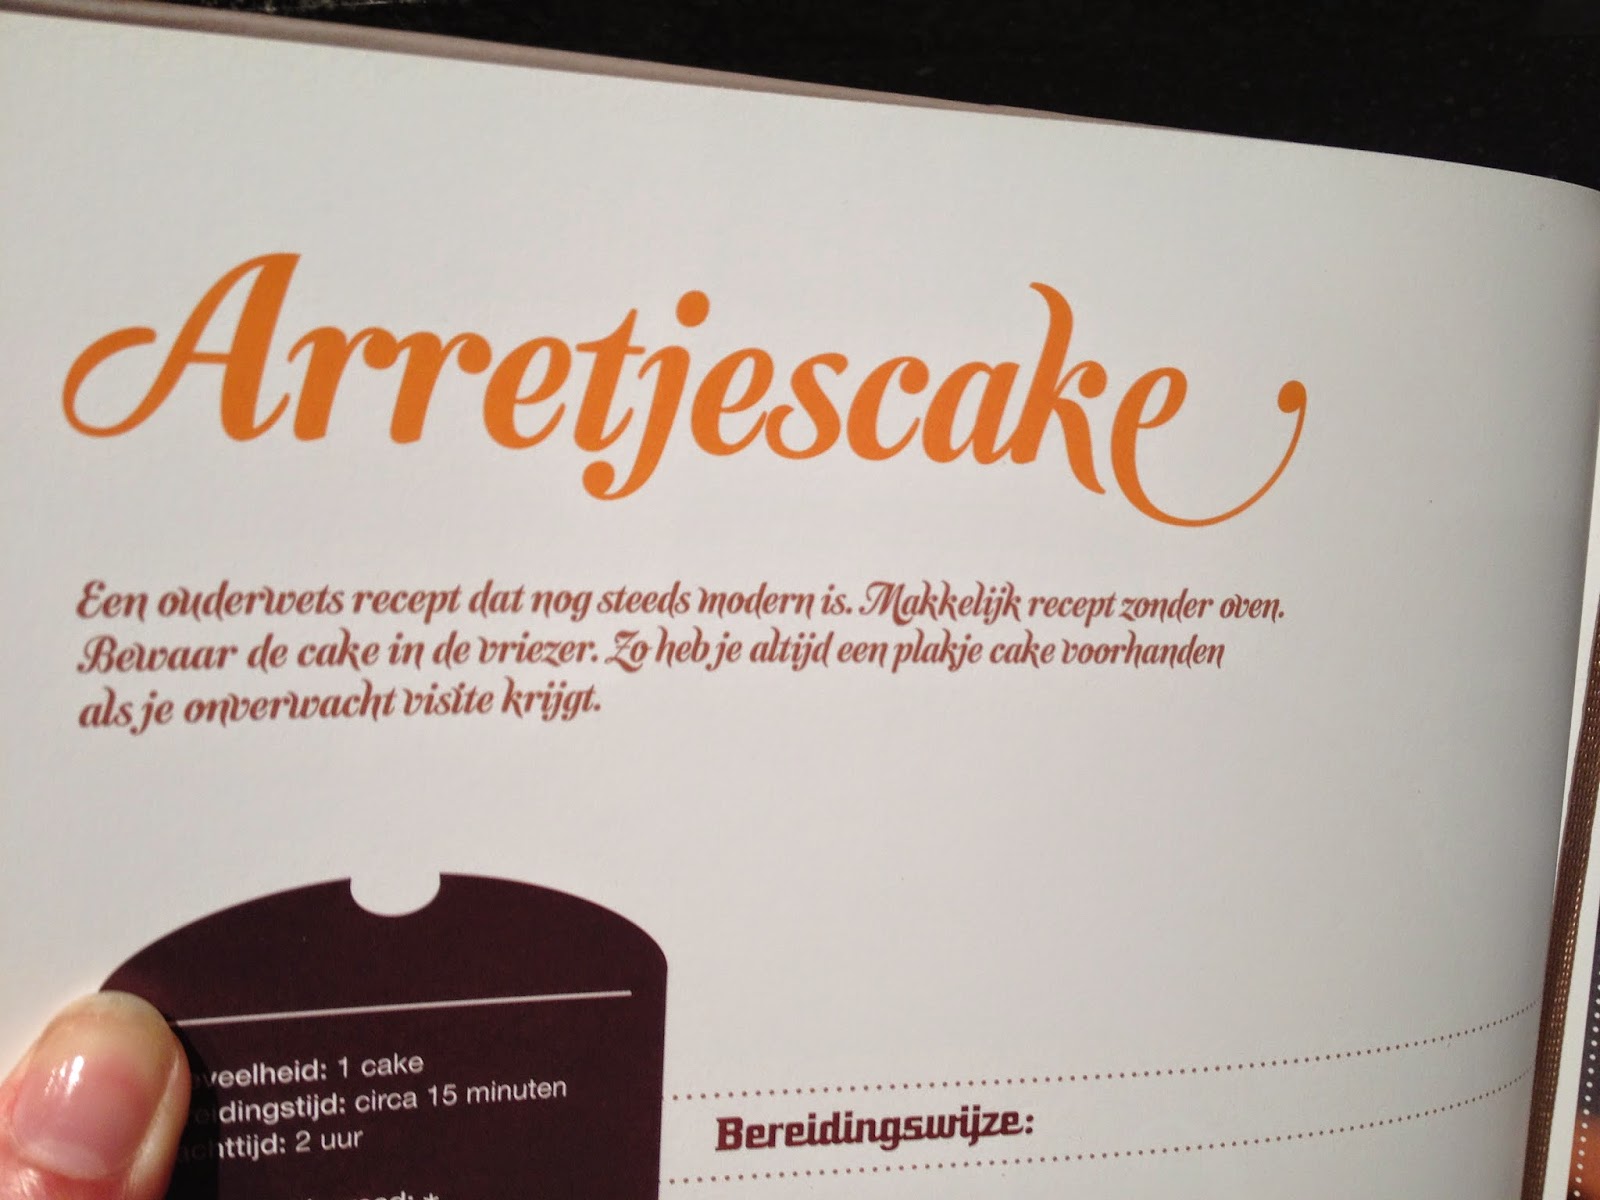 Bad Sneeuwwitje Afkeer Esther's Bakery: Recept nummer 2, cakes, arretjescake